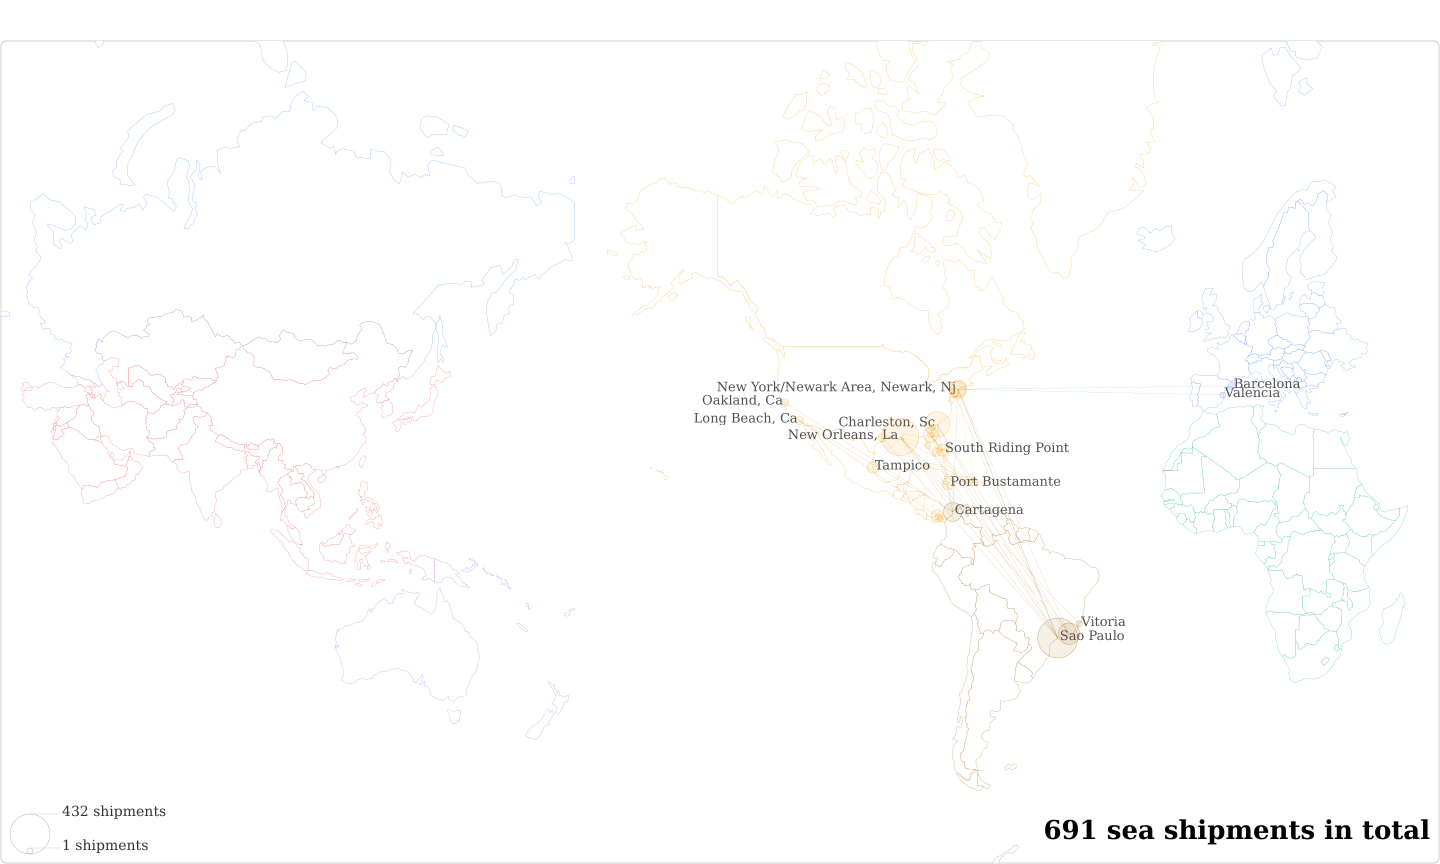 Companhia Cacique De Cafe Soluvel's Imports Per Country Map